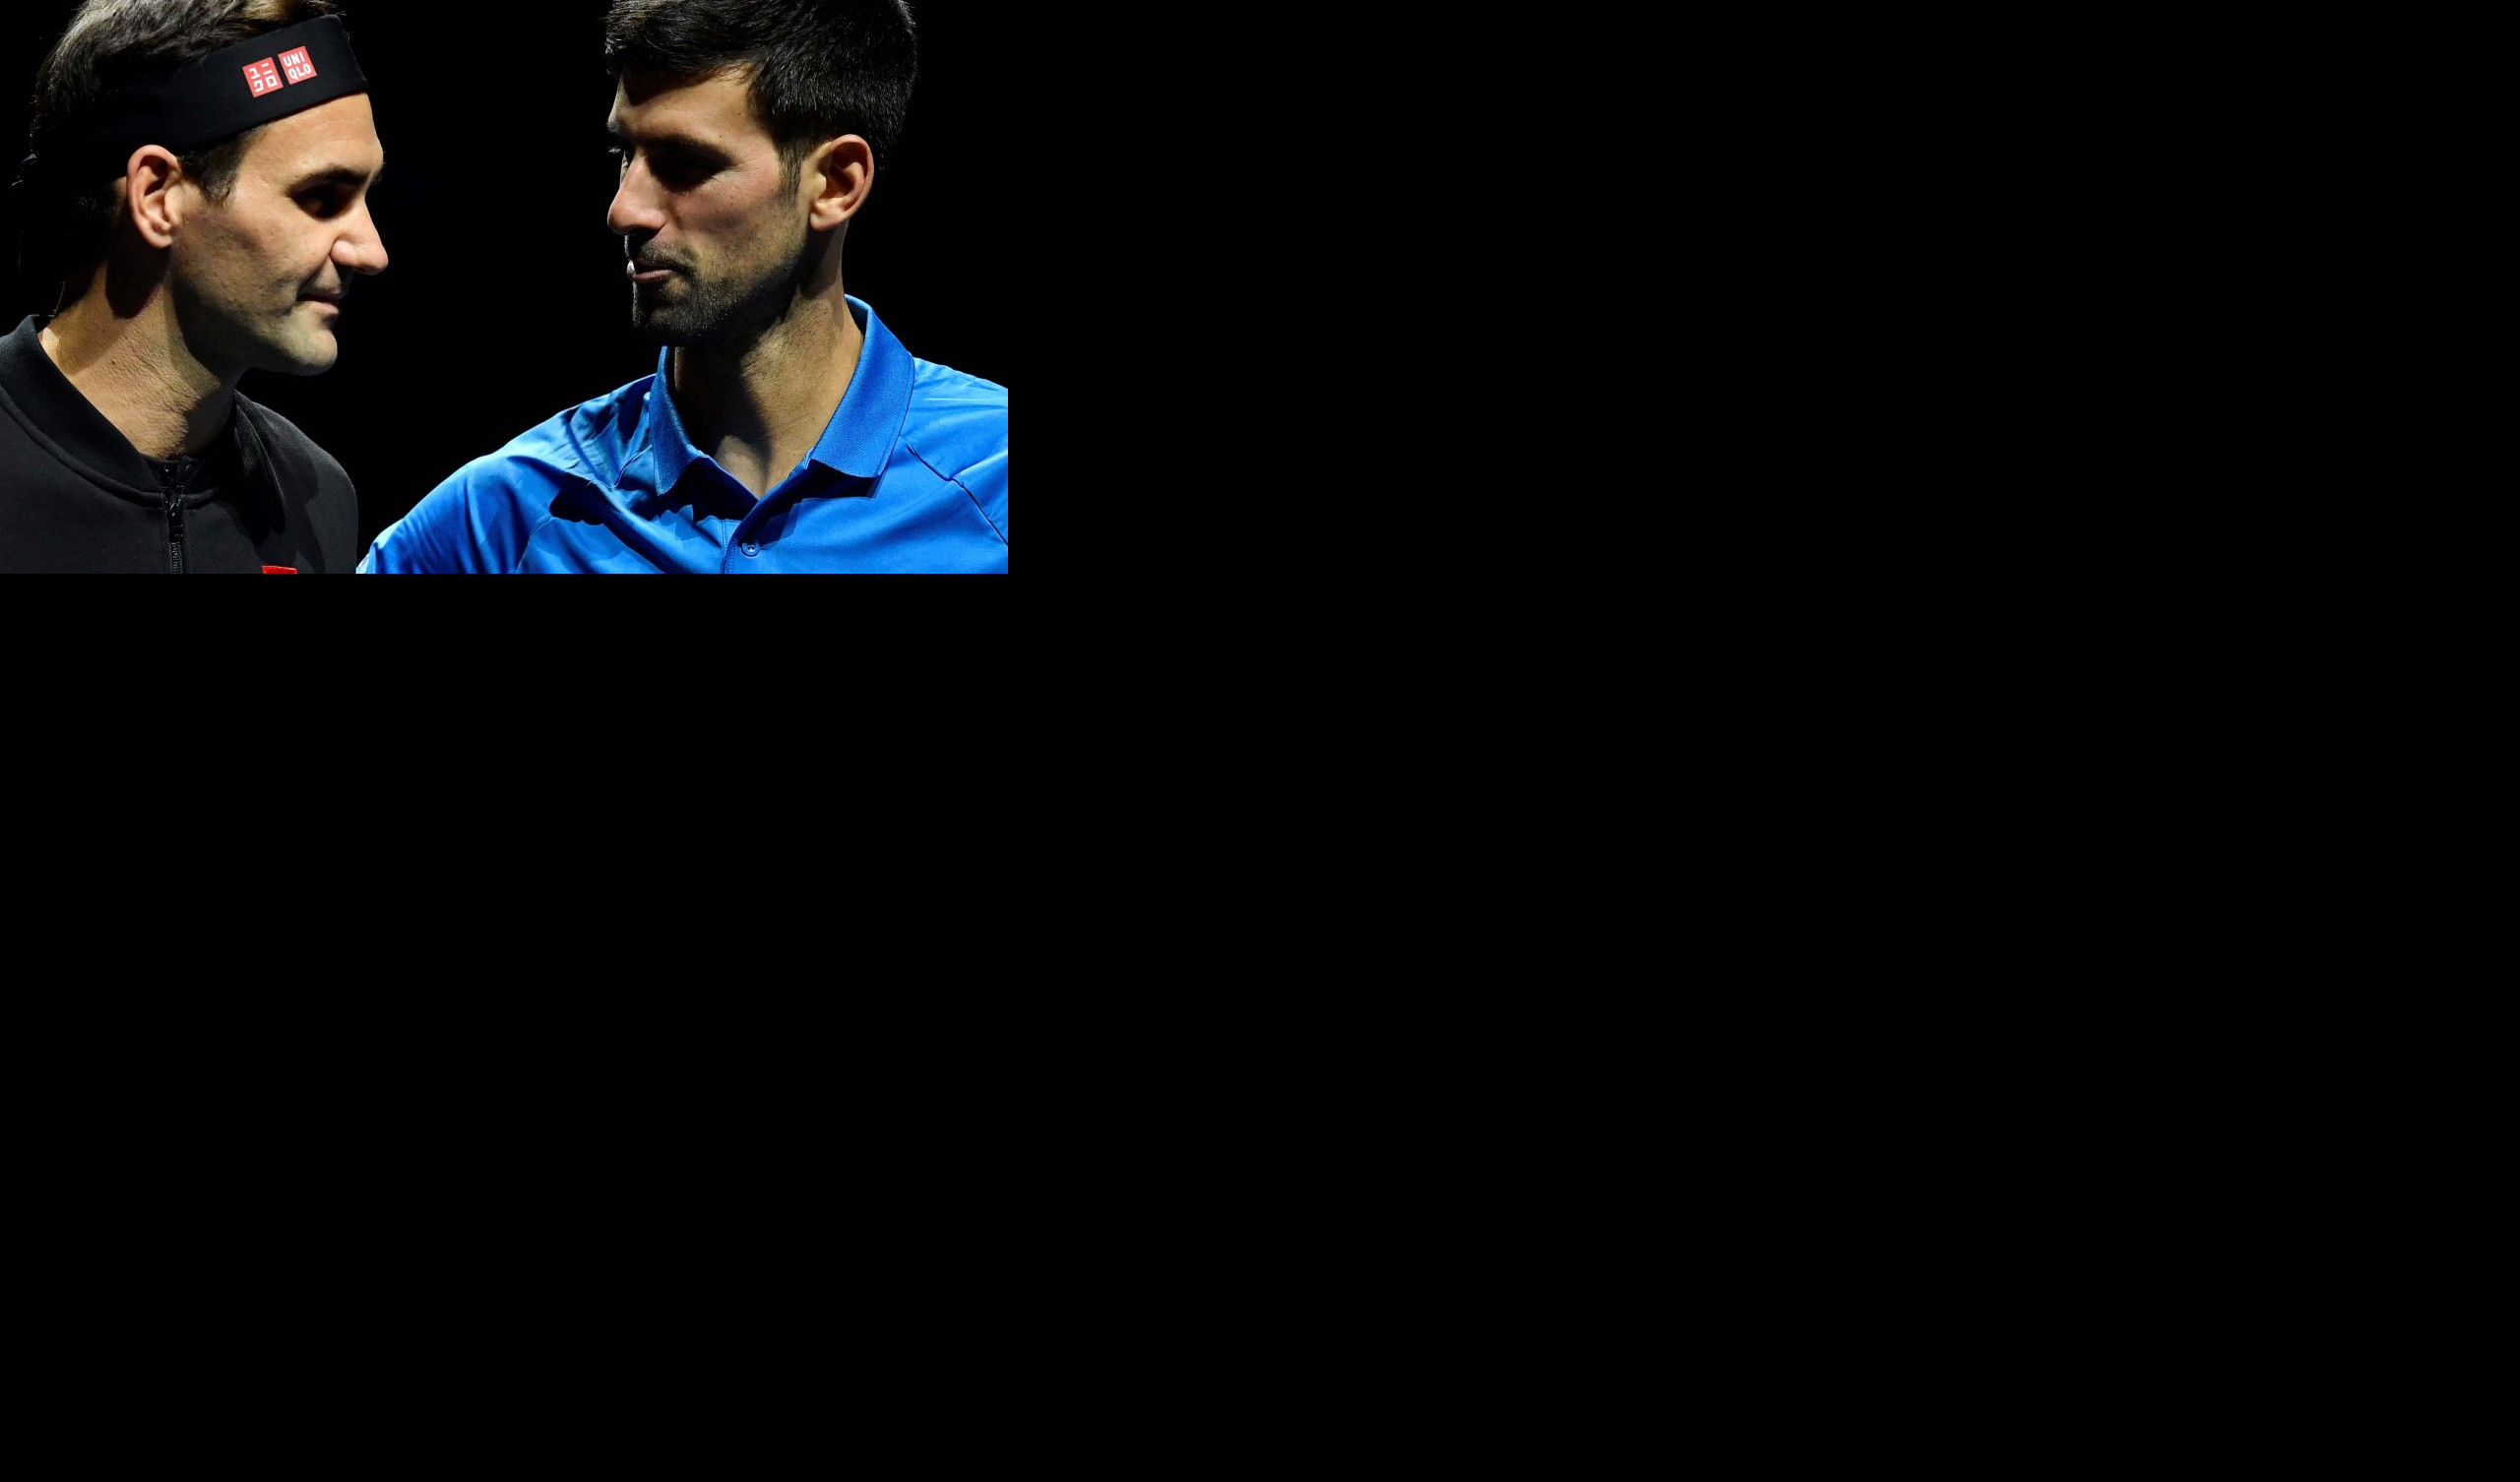 OPA! 100 STEPENI! INSTAGRAM KLJUČA! Federer odgovorio Novaku, OVE REČI GOVORE SVE! (FOTO)